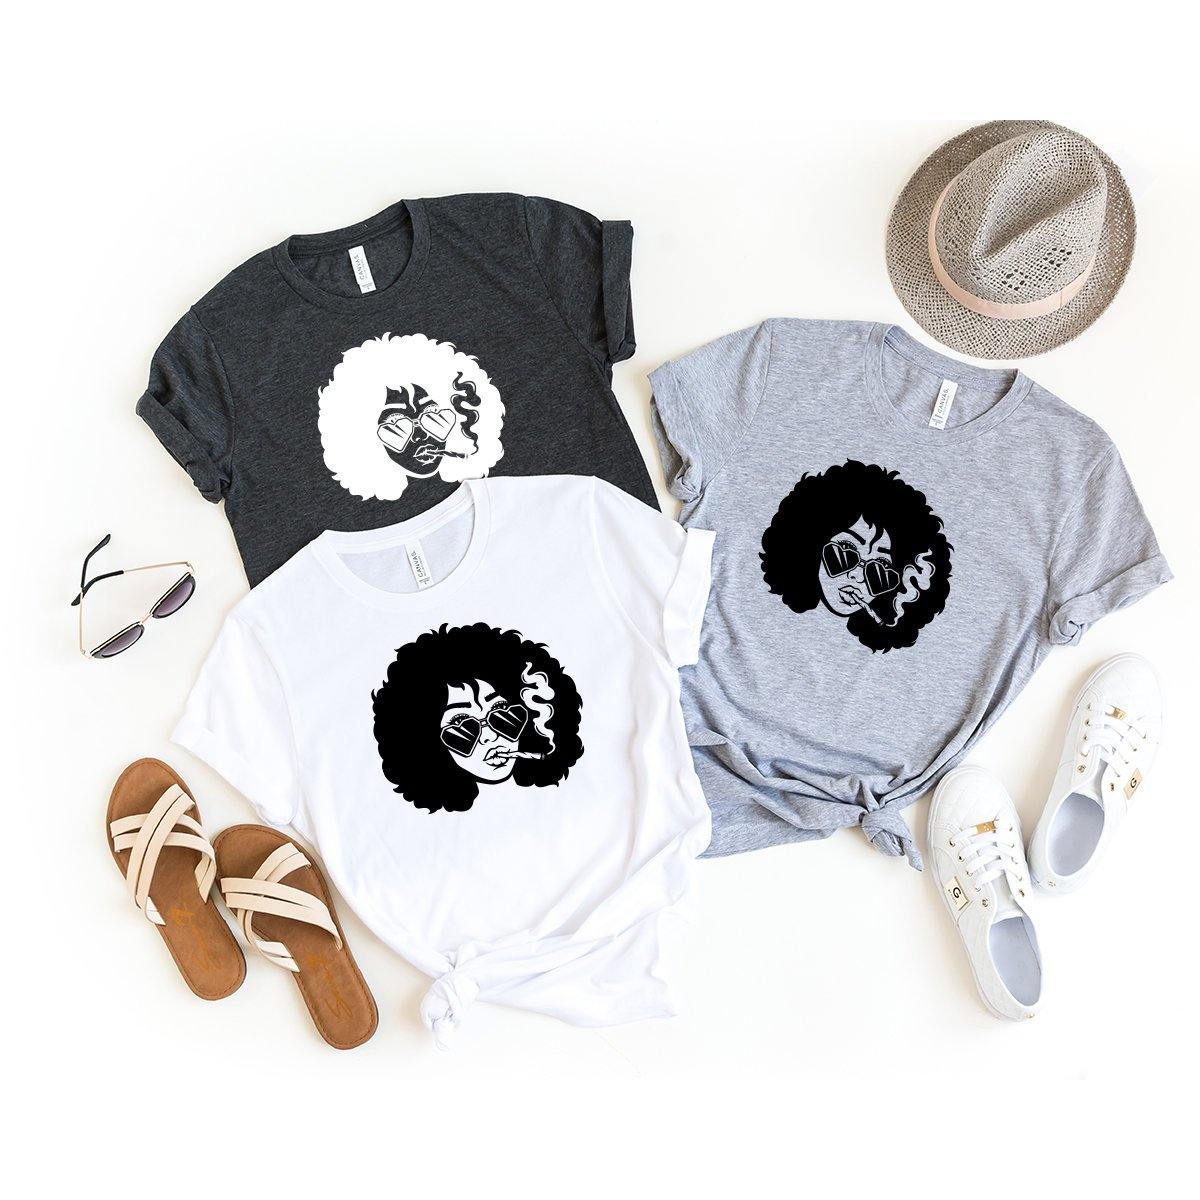 Afro Girl Smoking Shirt, Weed Shirt, Afro Girl Shirt, Weed Tee, Funny Weed Shirt, Marijuana Shirt, Stoner Shirt, Cannabis Shirt, 420 Shirt - Fastdeliverytees.com